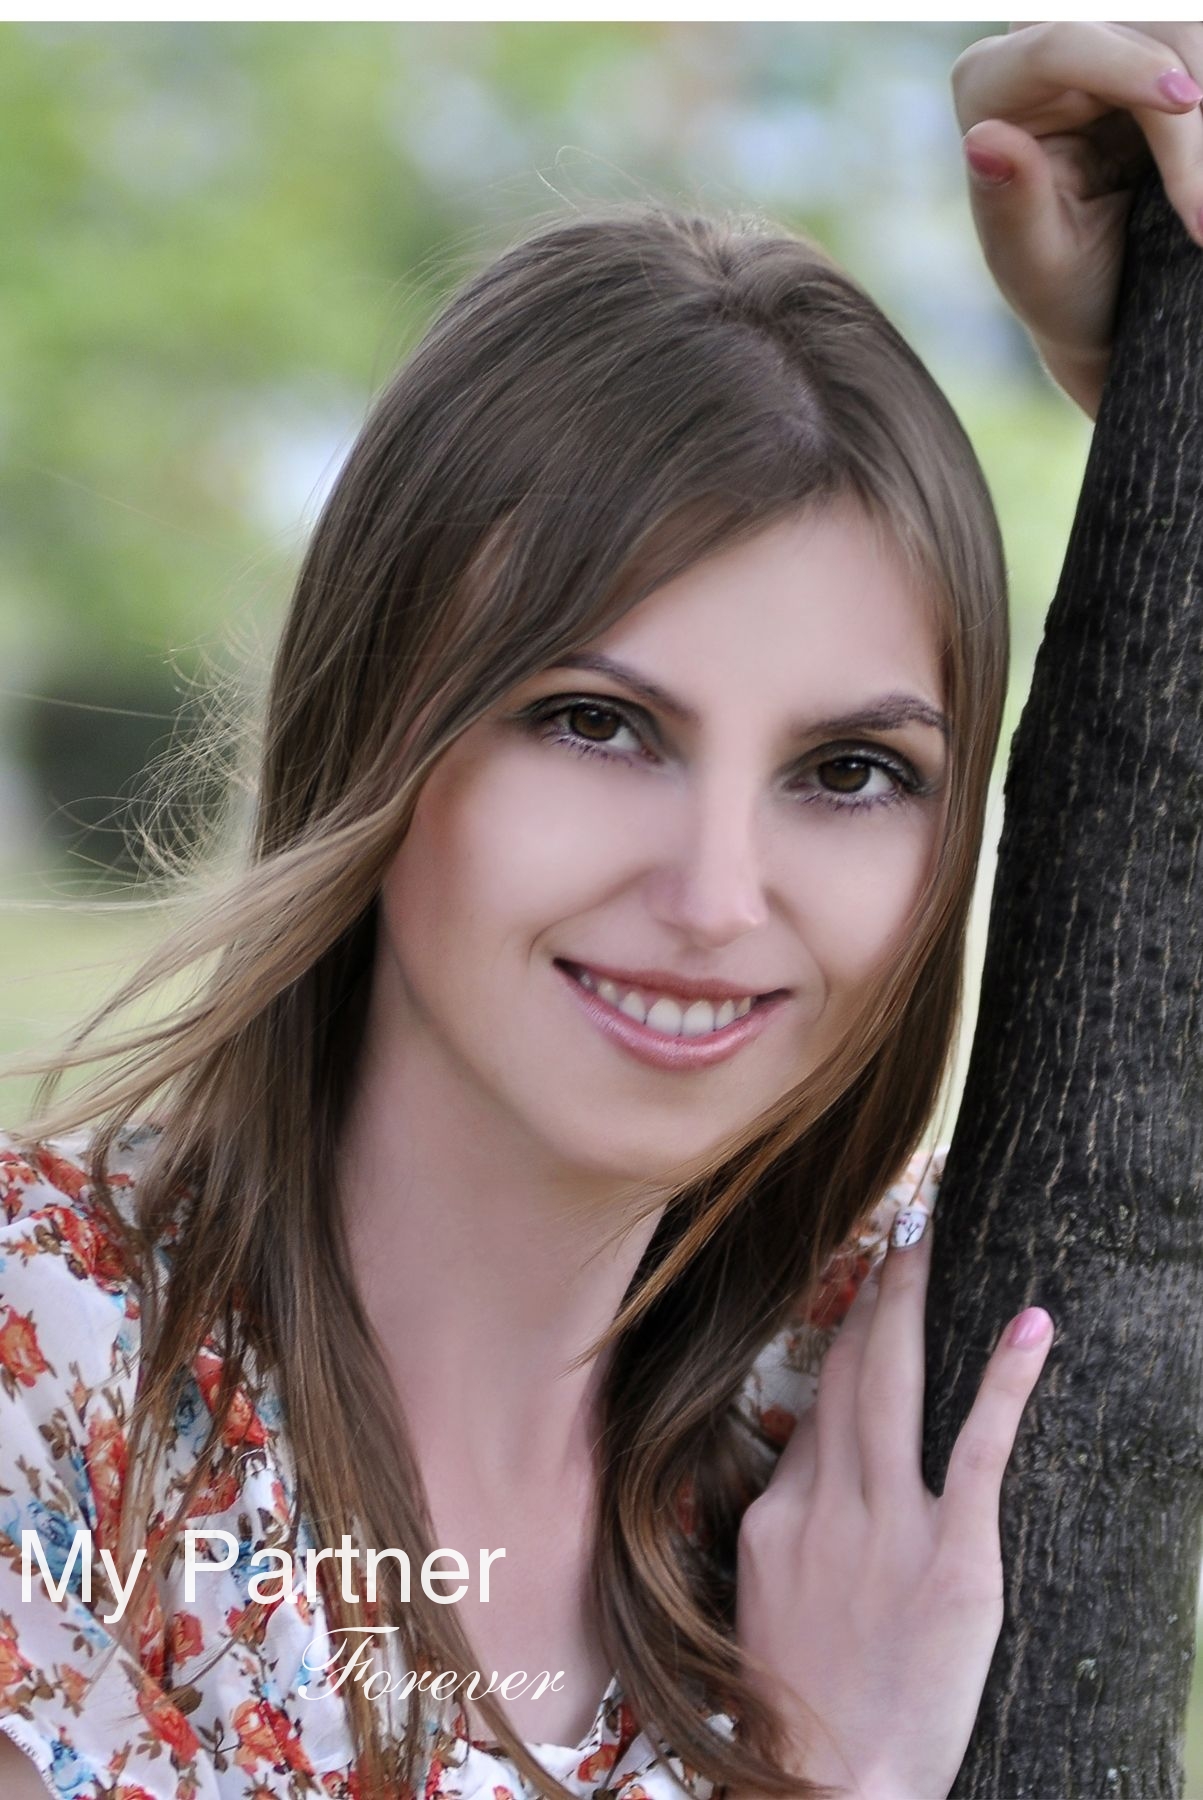 Dating Service to Meet Stunning Ukrainian Woman Olga from Kiev, Ukraine